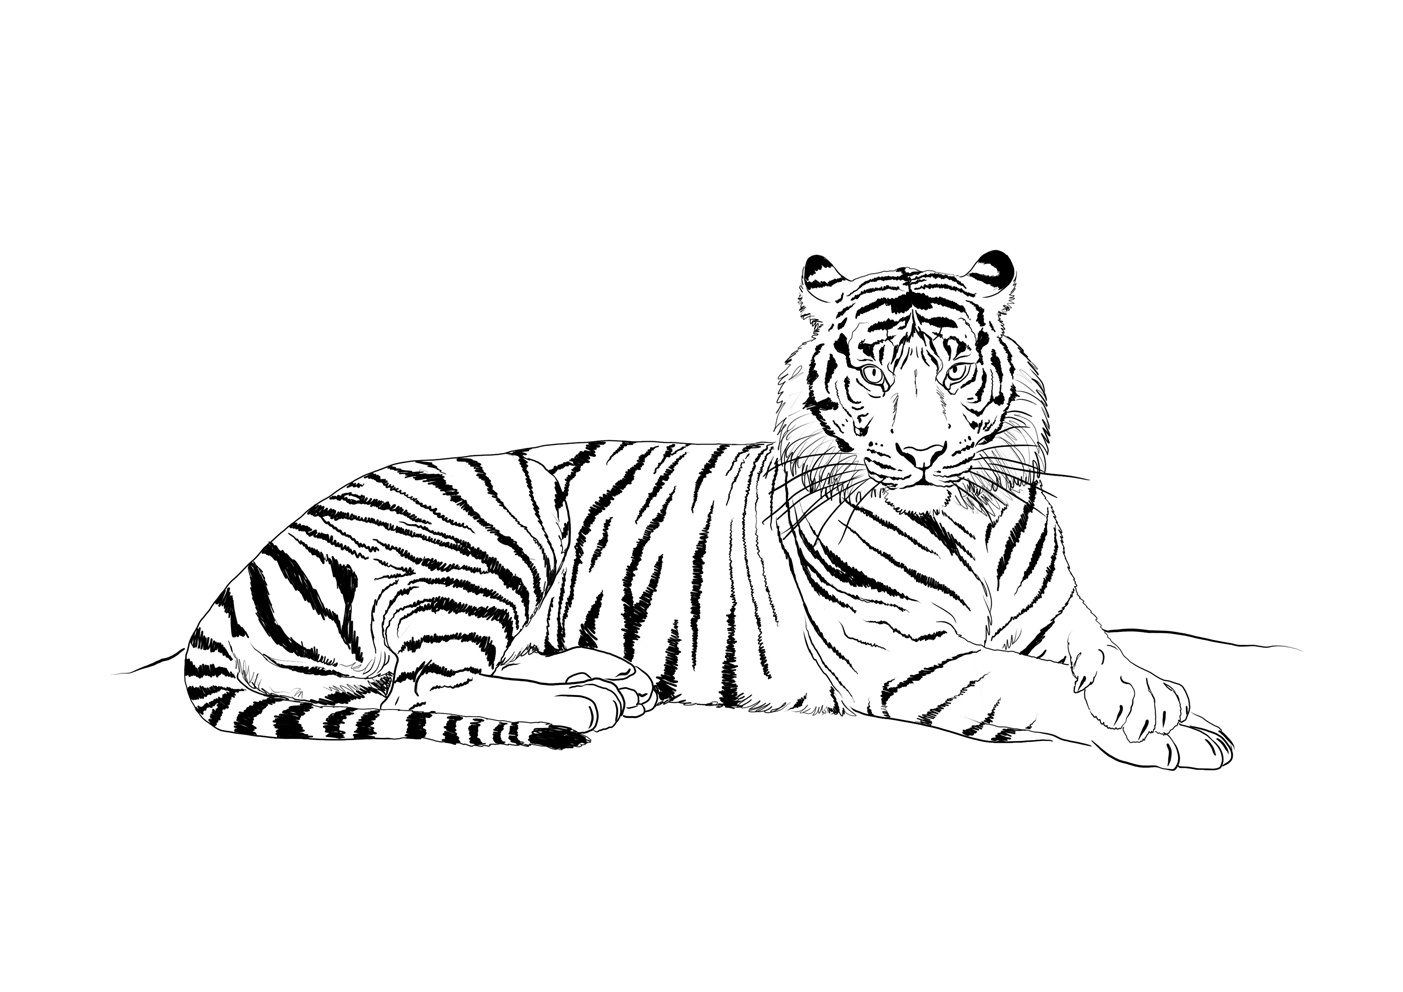 8 Luxe De Dessin Bébé Tigre Image  Coloriage  Coloriage